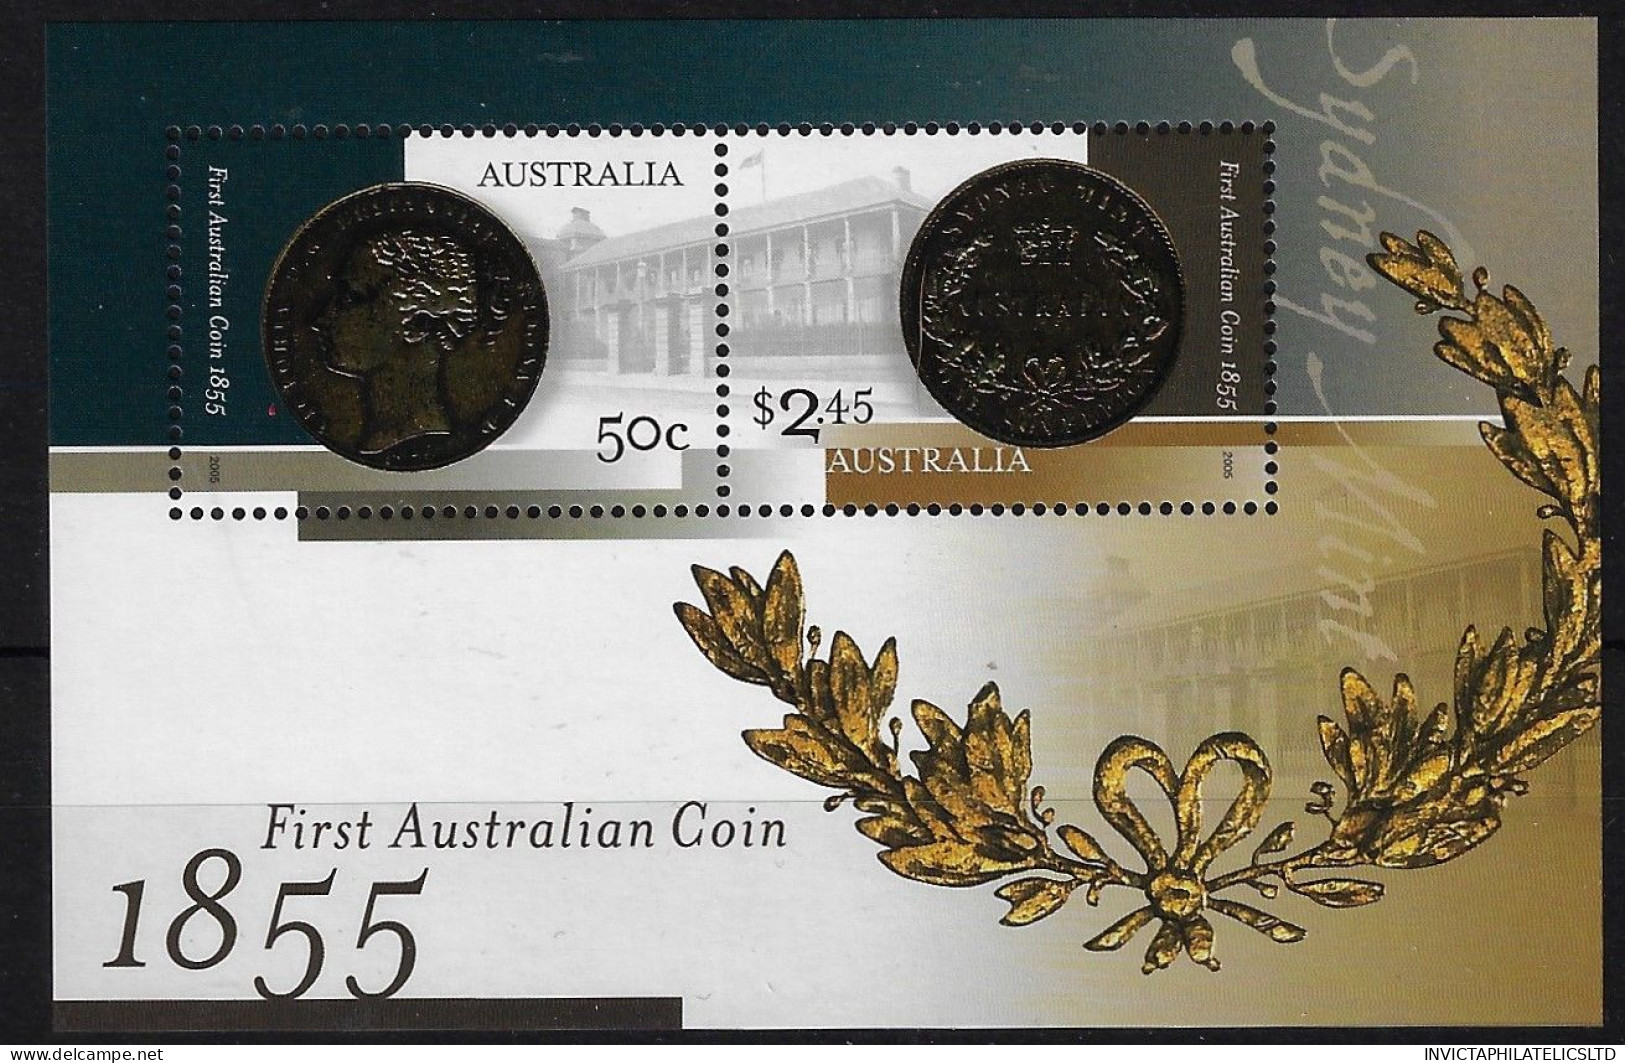 AUSTRALIA MS2521, 2005 COINS MINIATURE SHEET MNH - Mint Stamps